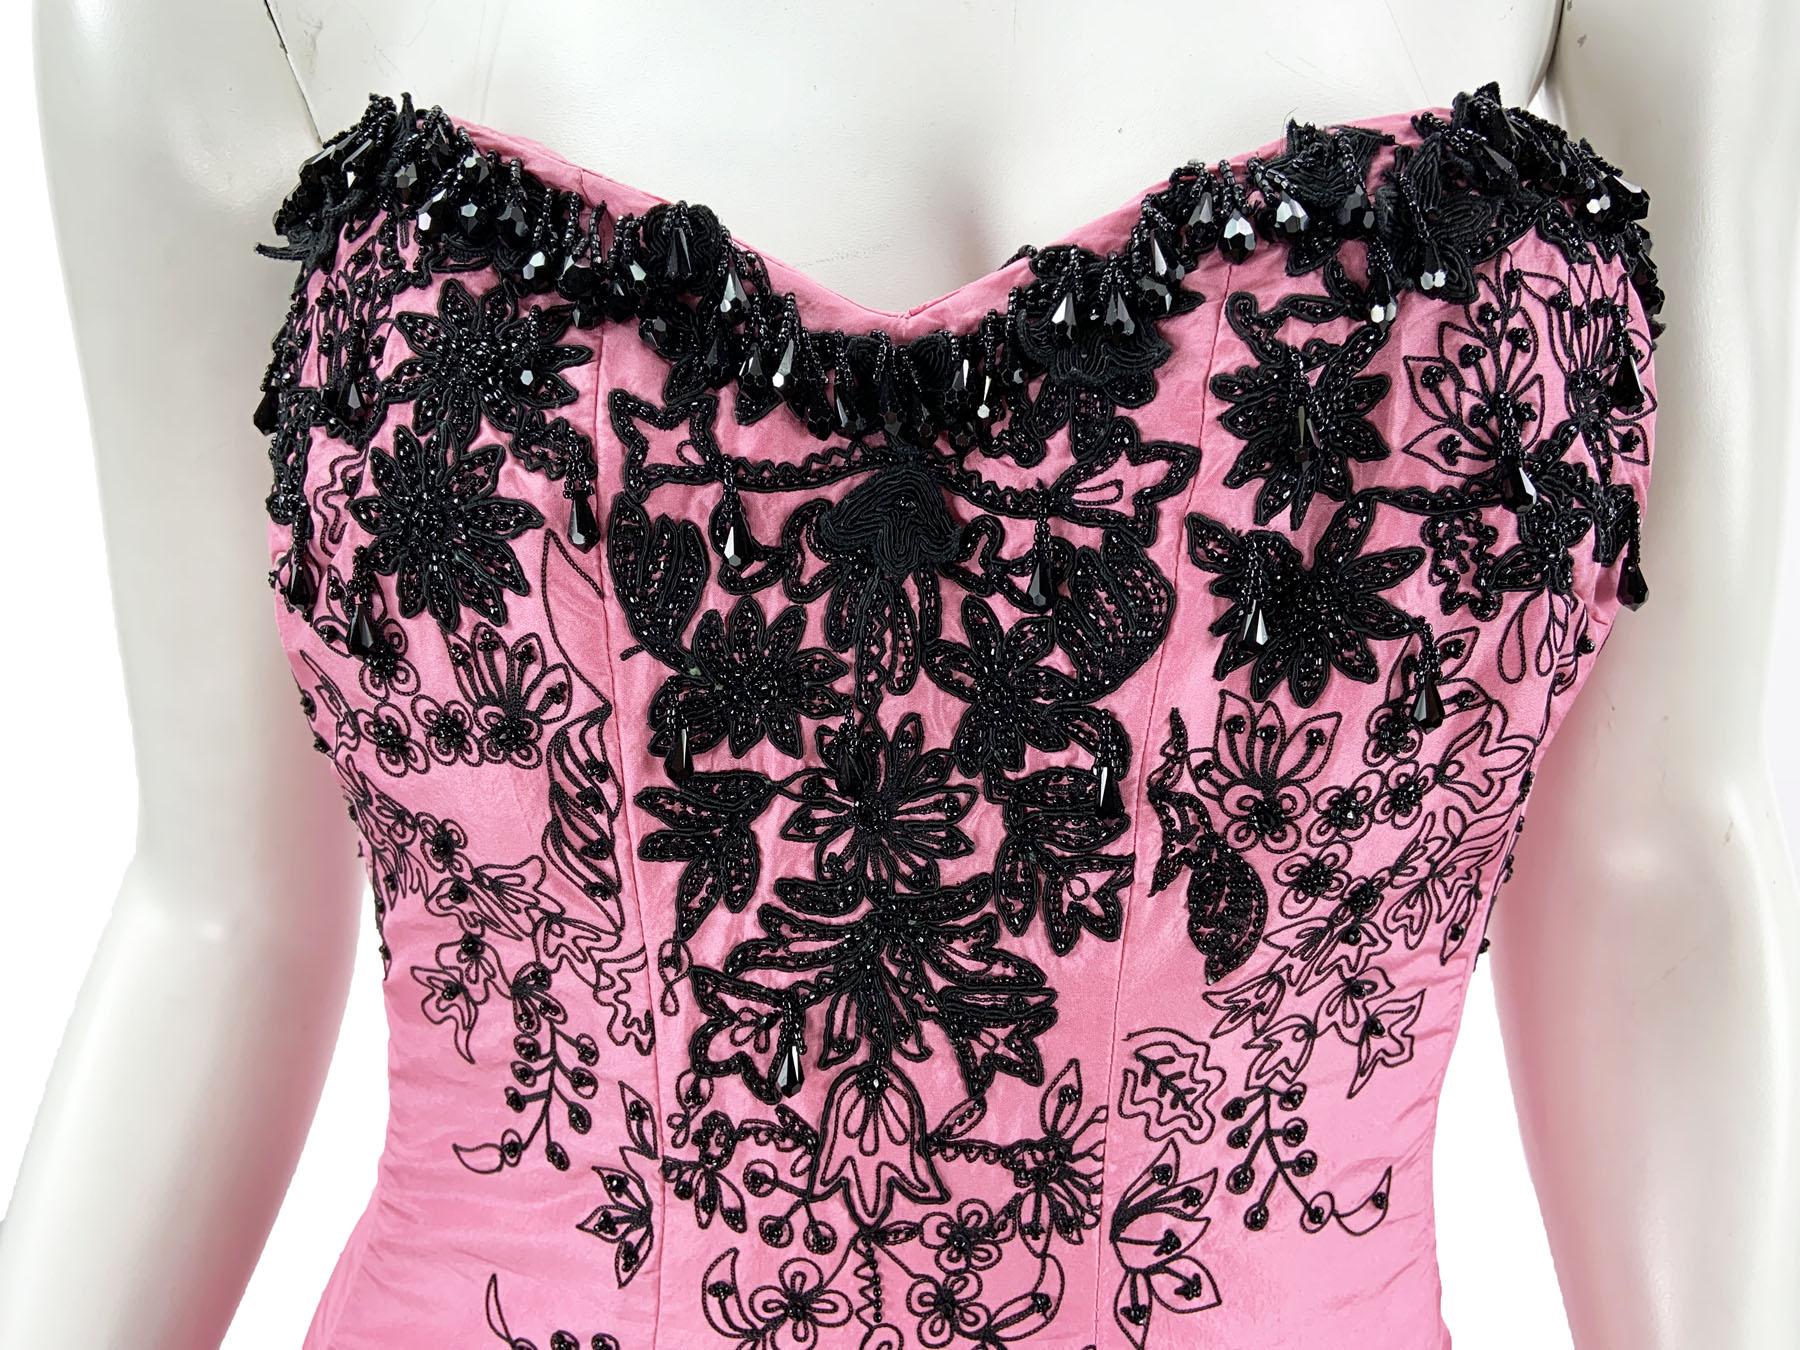 Oscar de la Renta S/S 2004 Collection Pink Silk Taffeta Embellished Dress Gown 8 For Sale 5